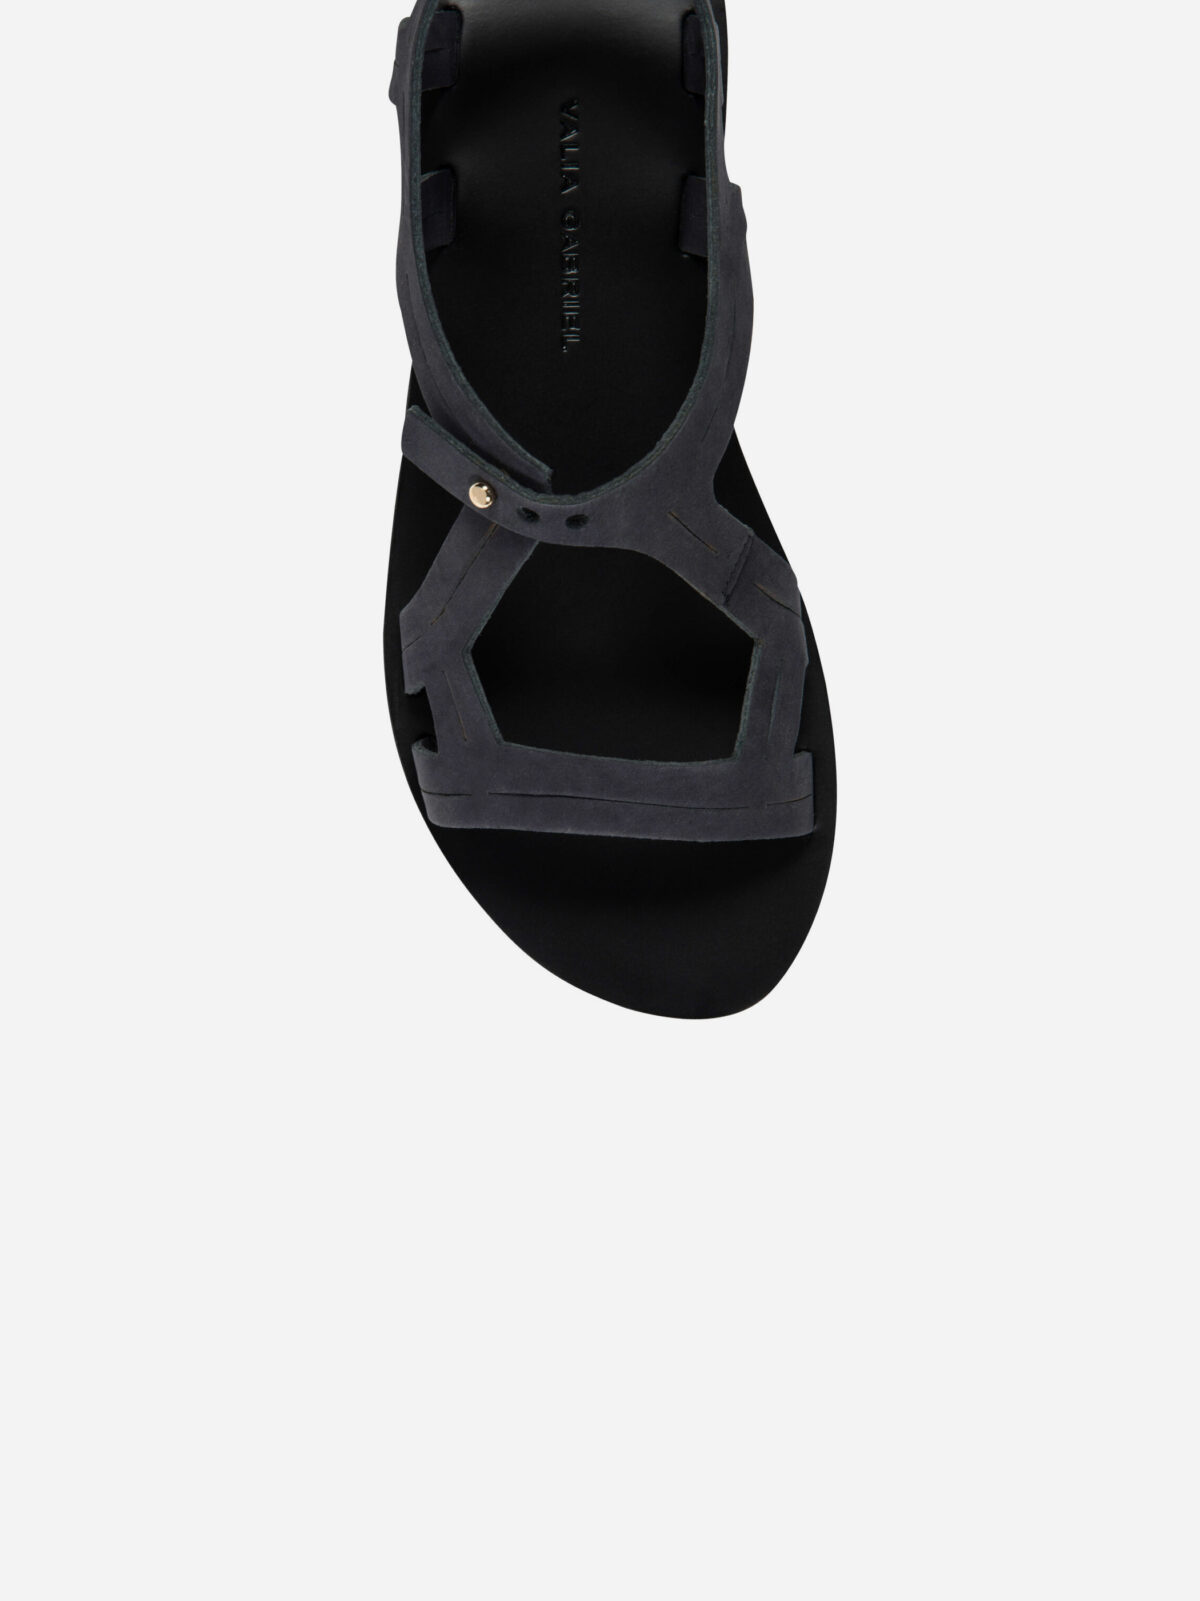 diana-black-leather-handmade-sandals-valia-gabriel-matchboxathens